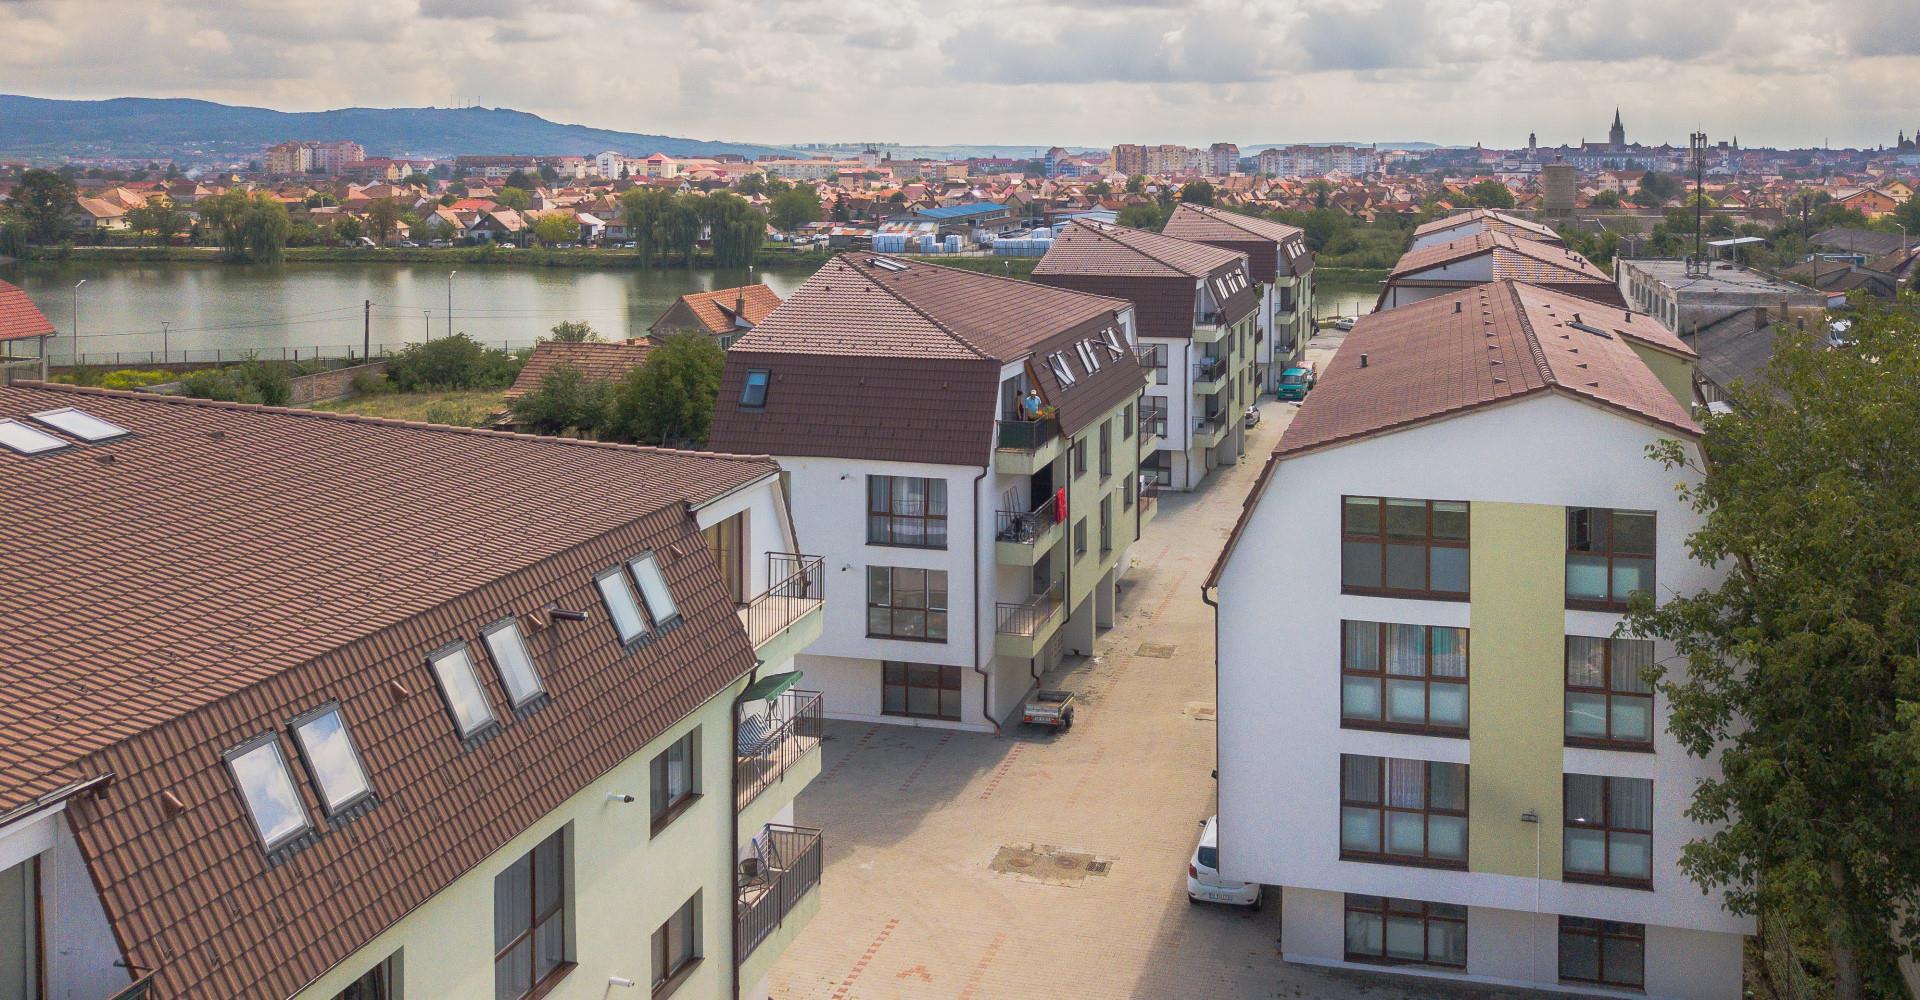 Lake Residence, Sibiu (72 apartments)